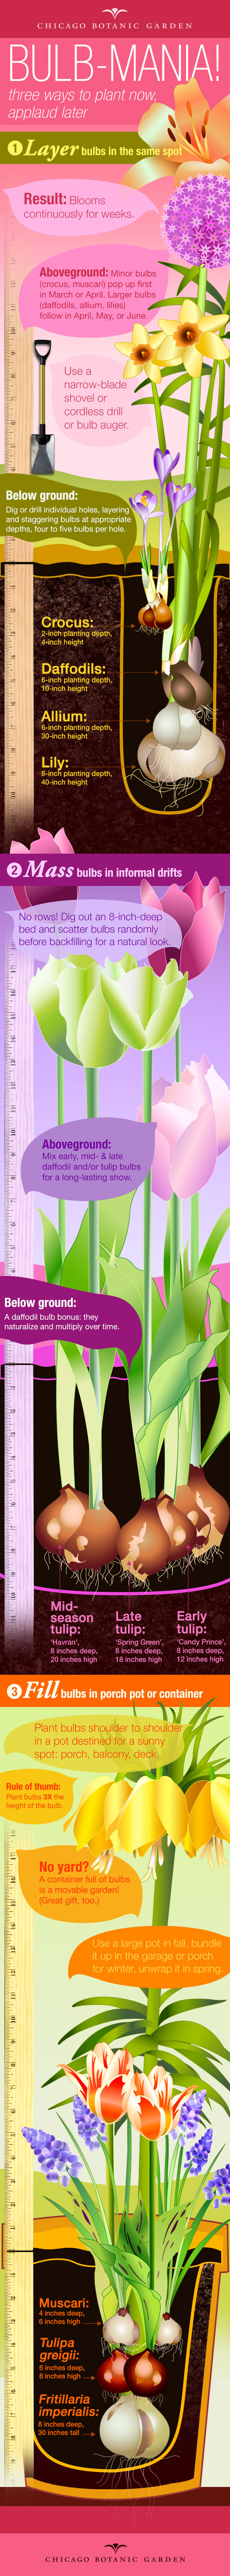 An Infographic on Planting Bulbs